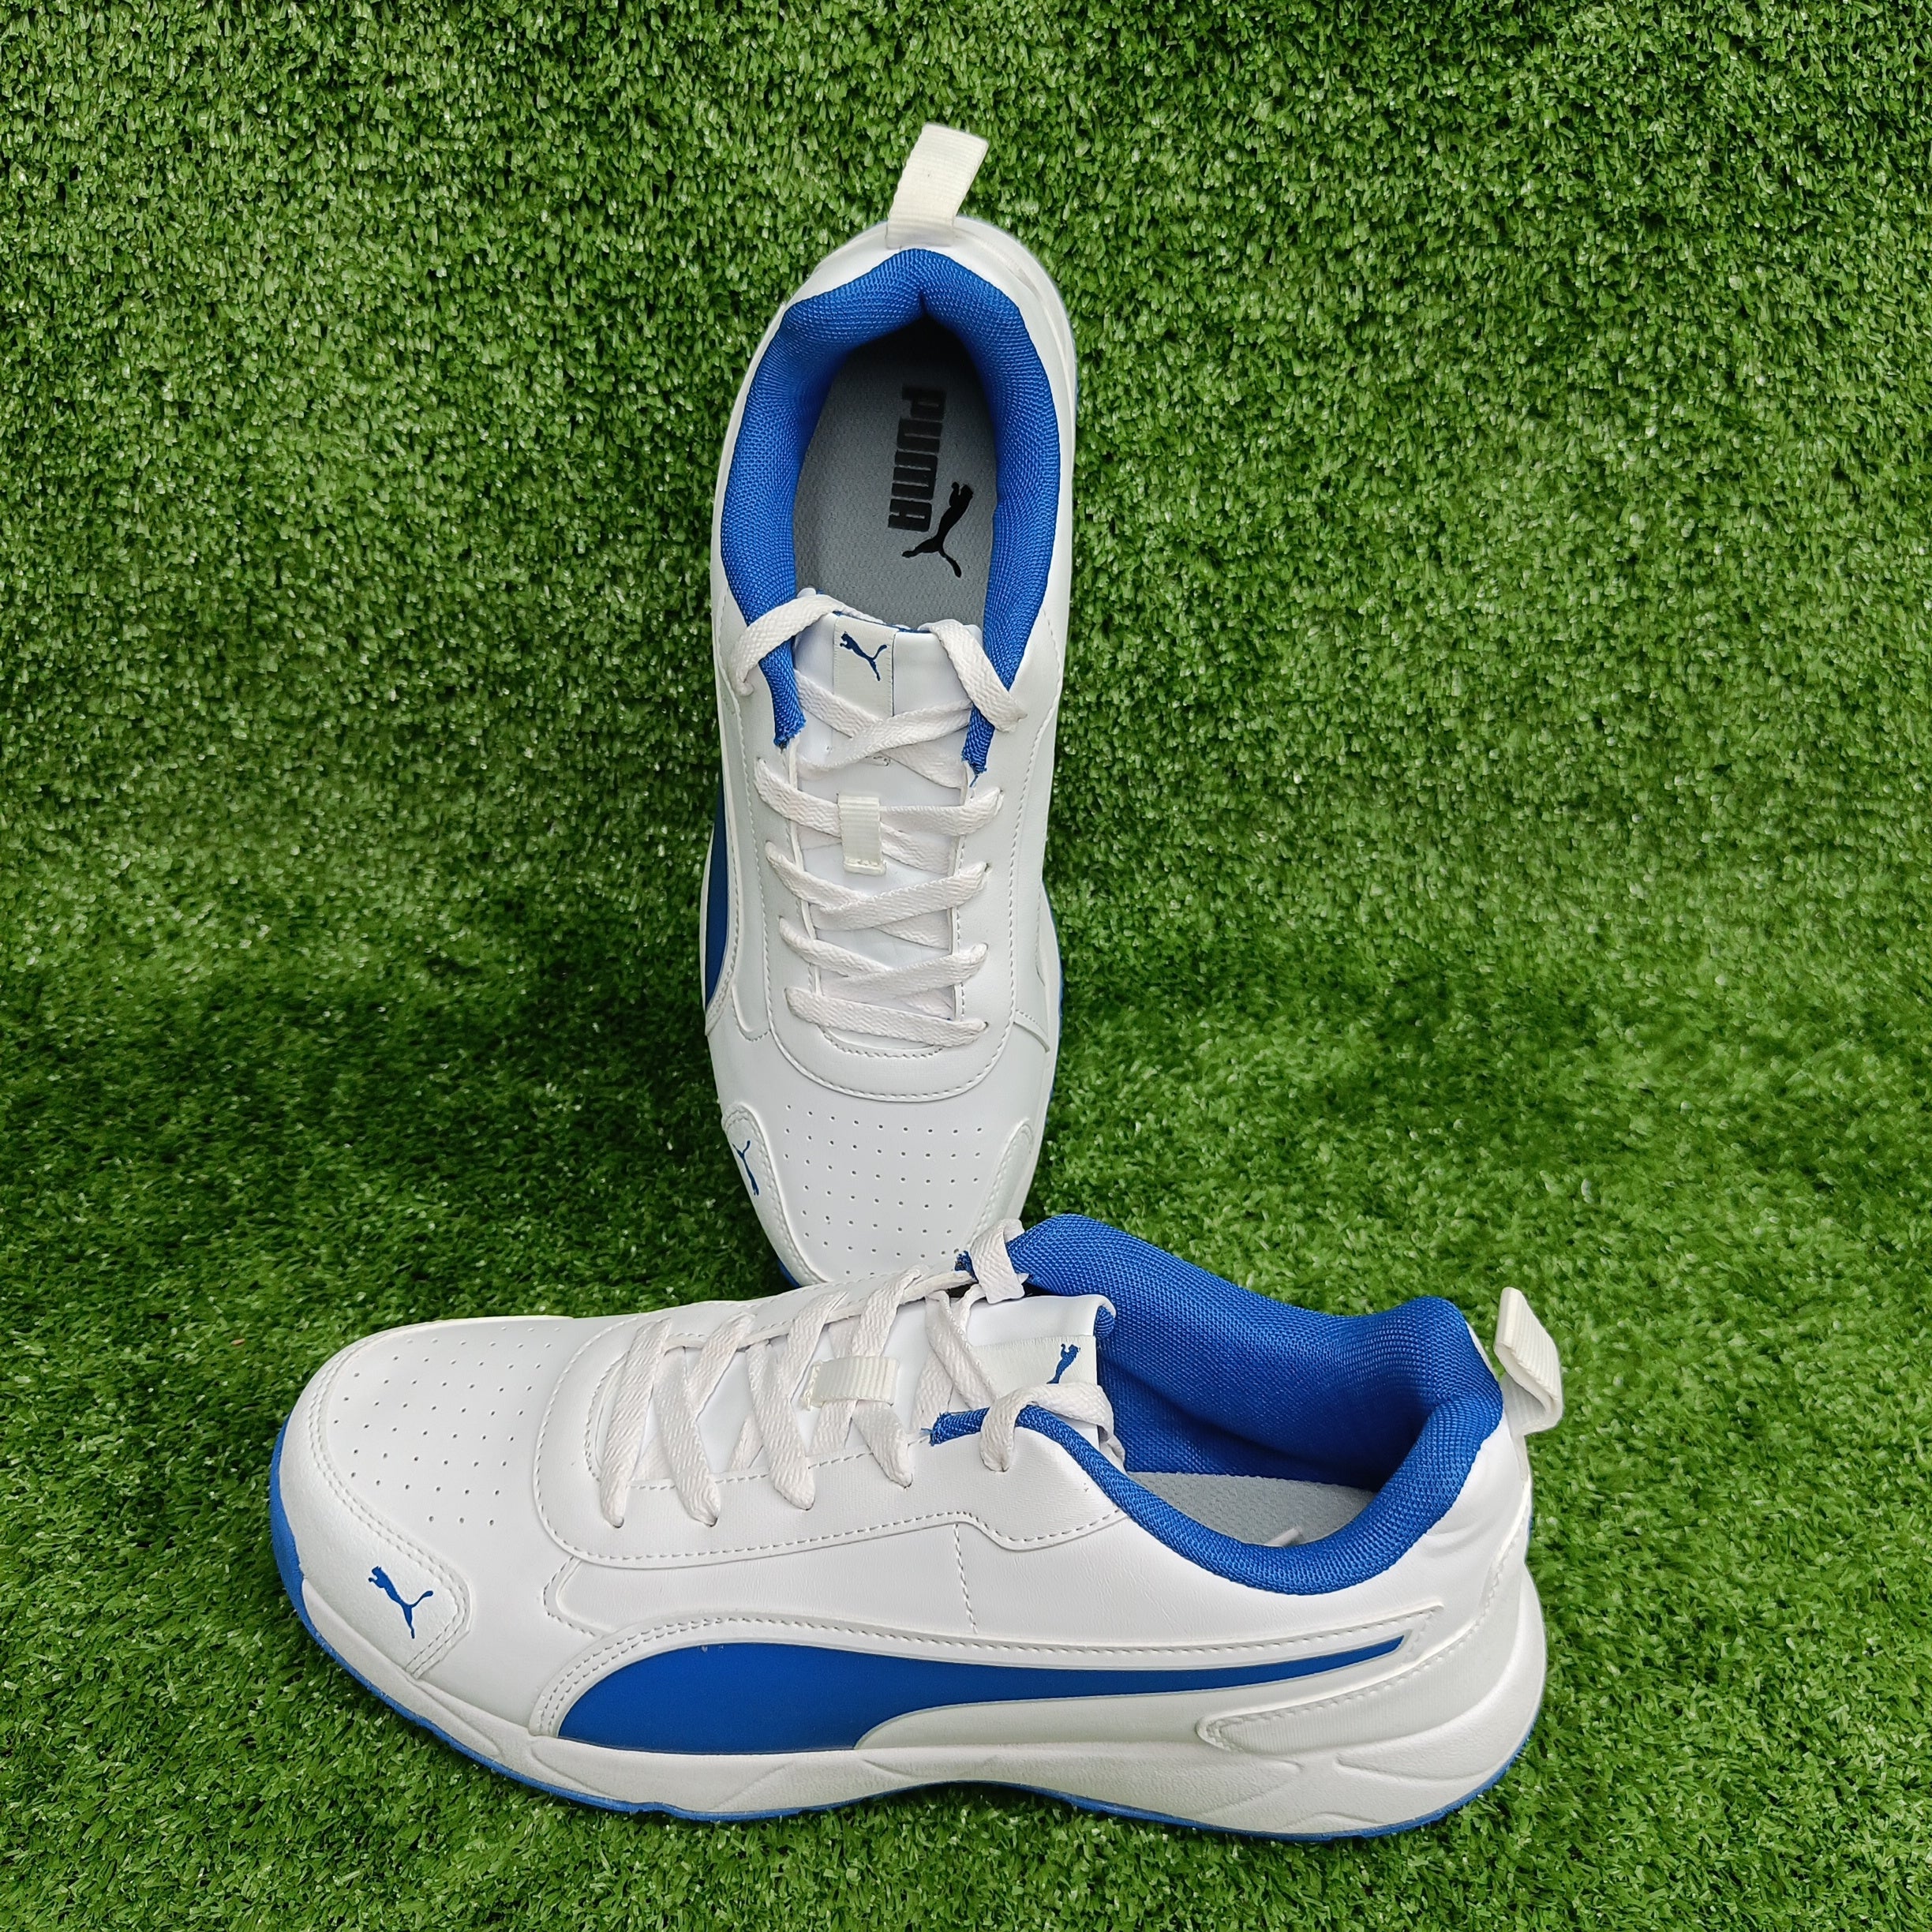 Puma White/ Blue Team Royal Cricket Shoes